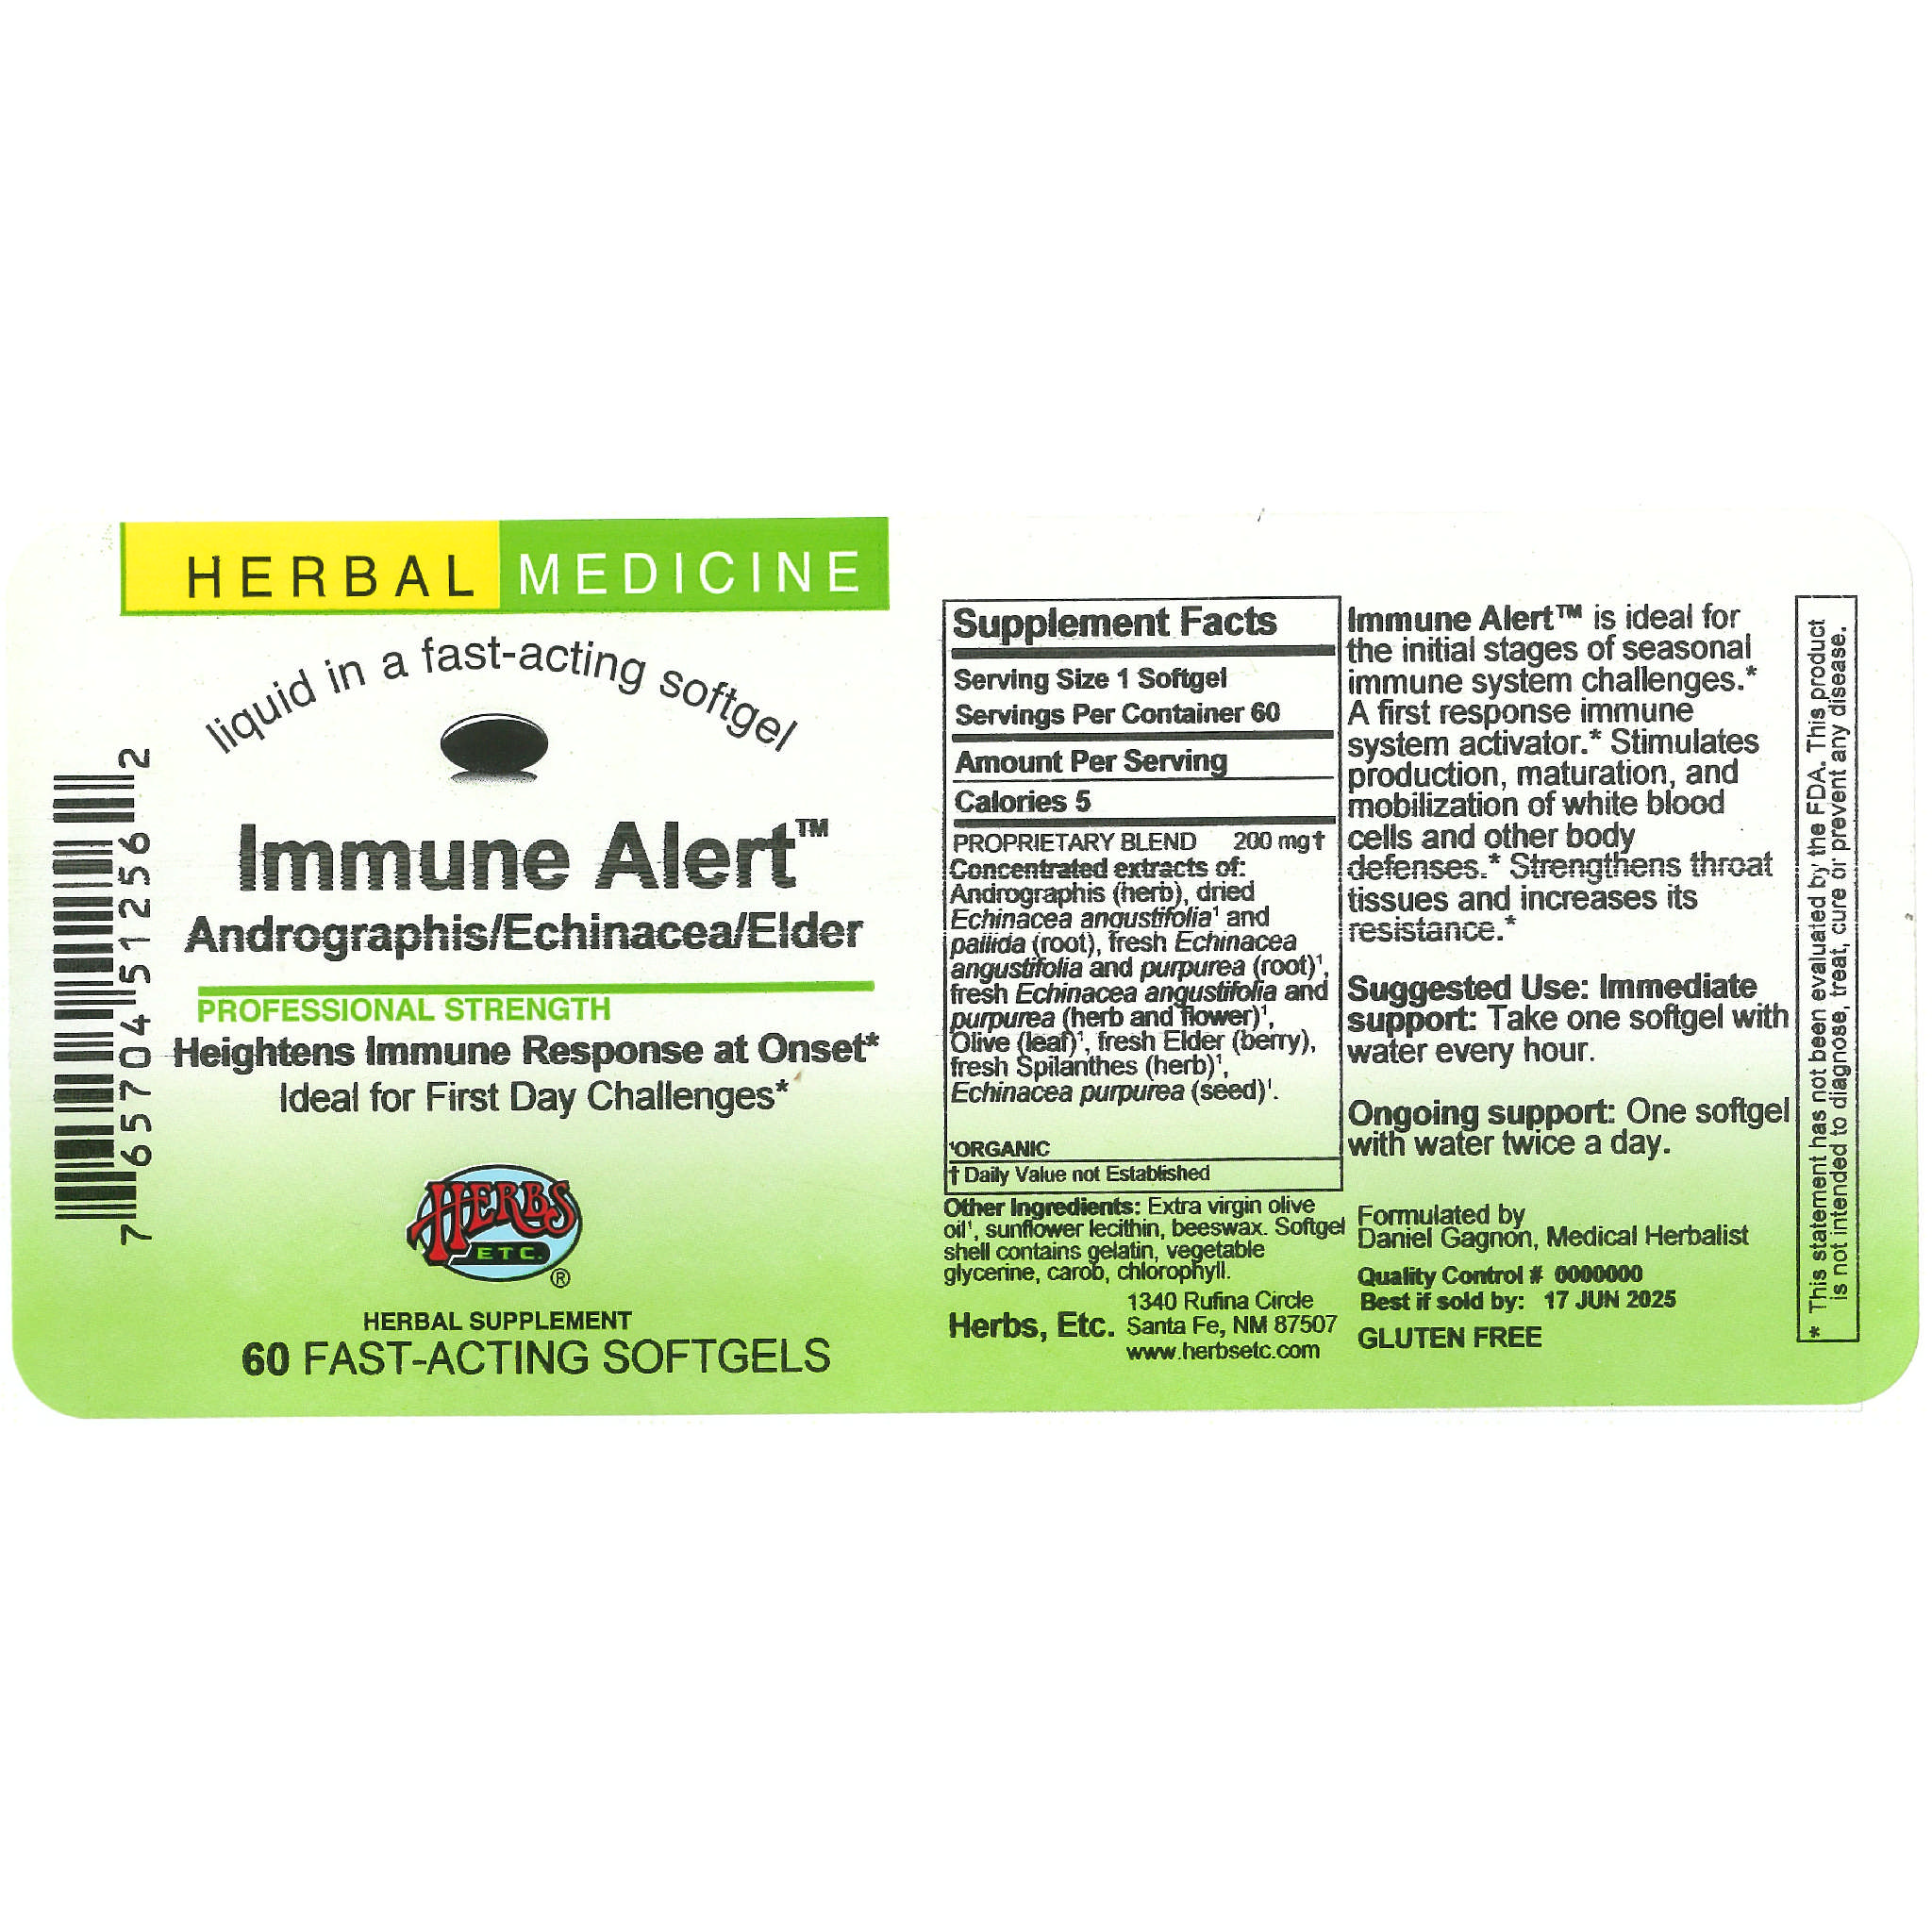 Herbs Etc - Immune Alert Early